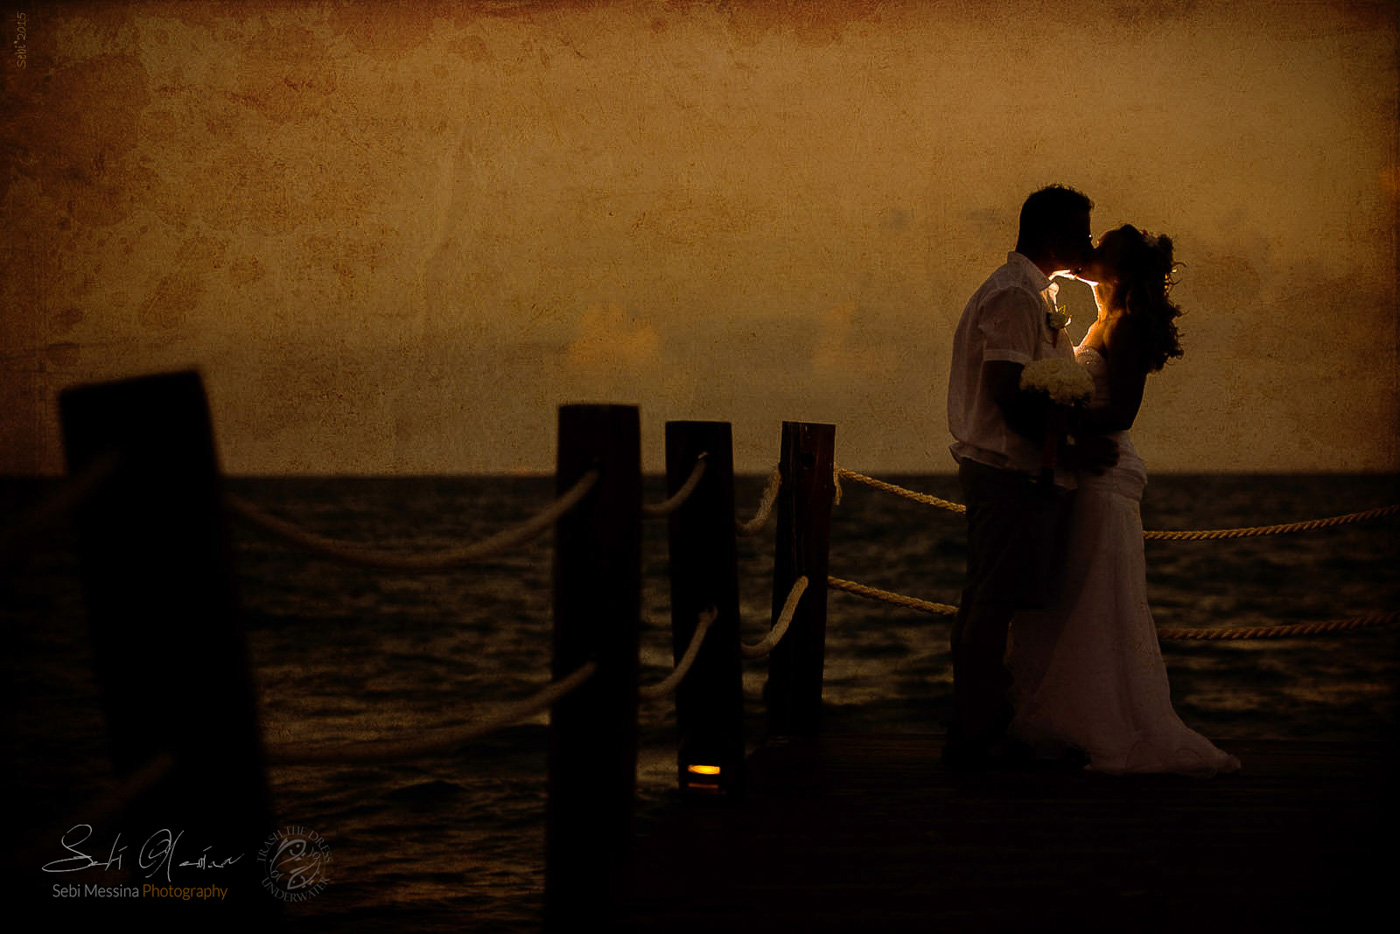 Ocean Maya Royale - Mexico Destination Wedding - Sebi Messina Photography